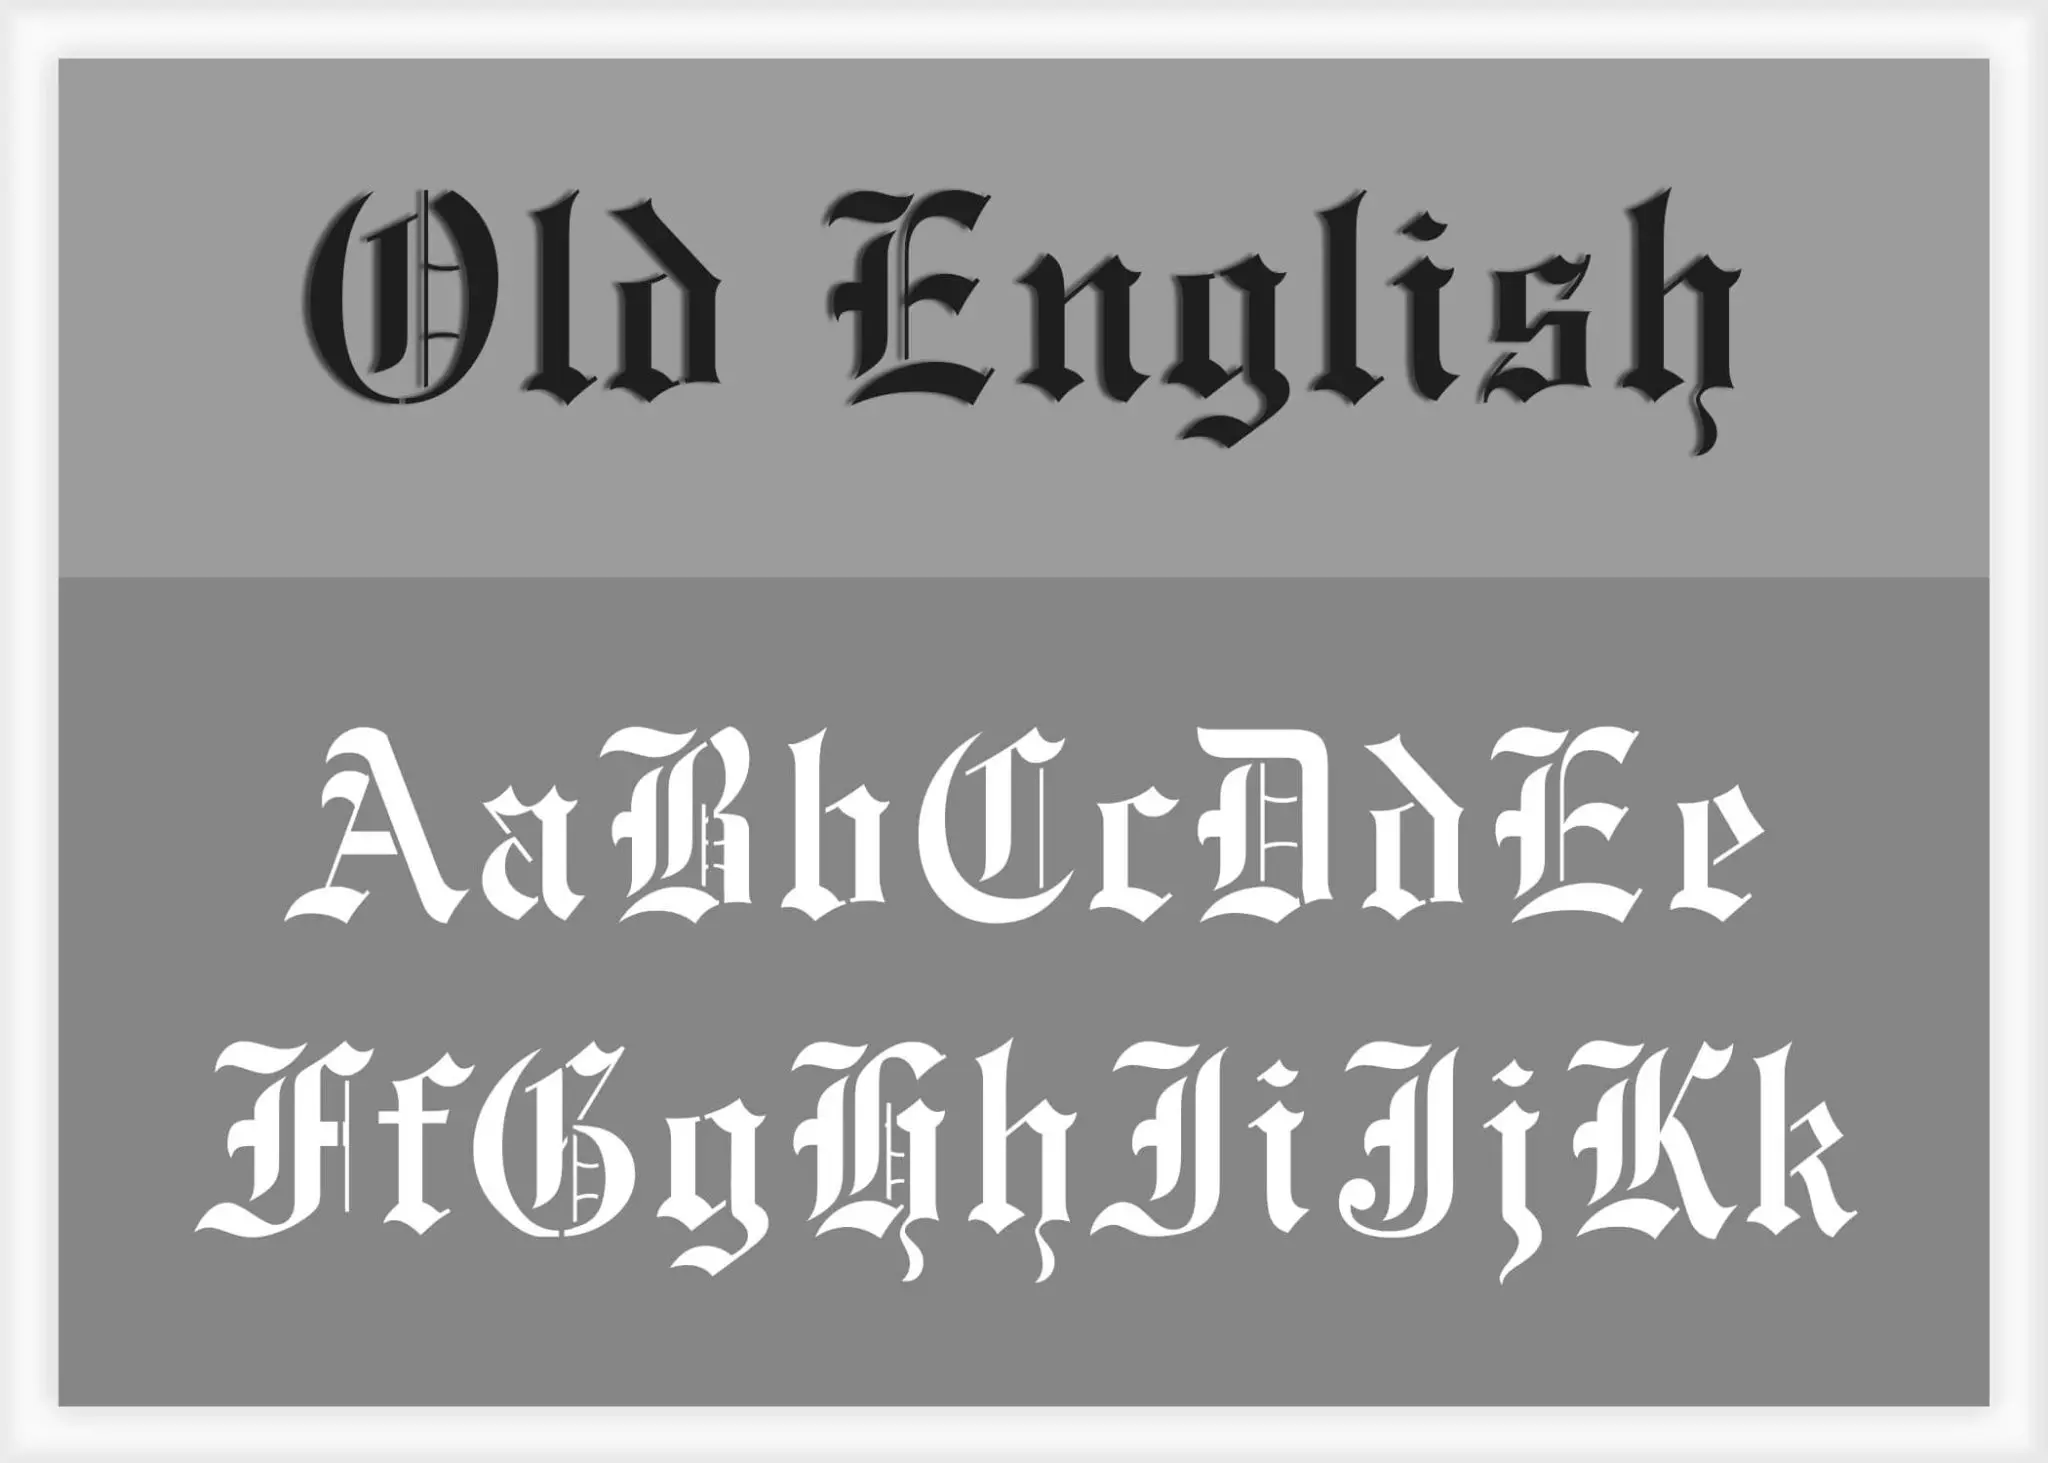 old english font akdphi letters